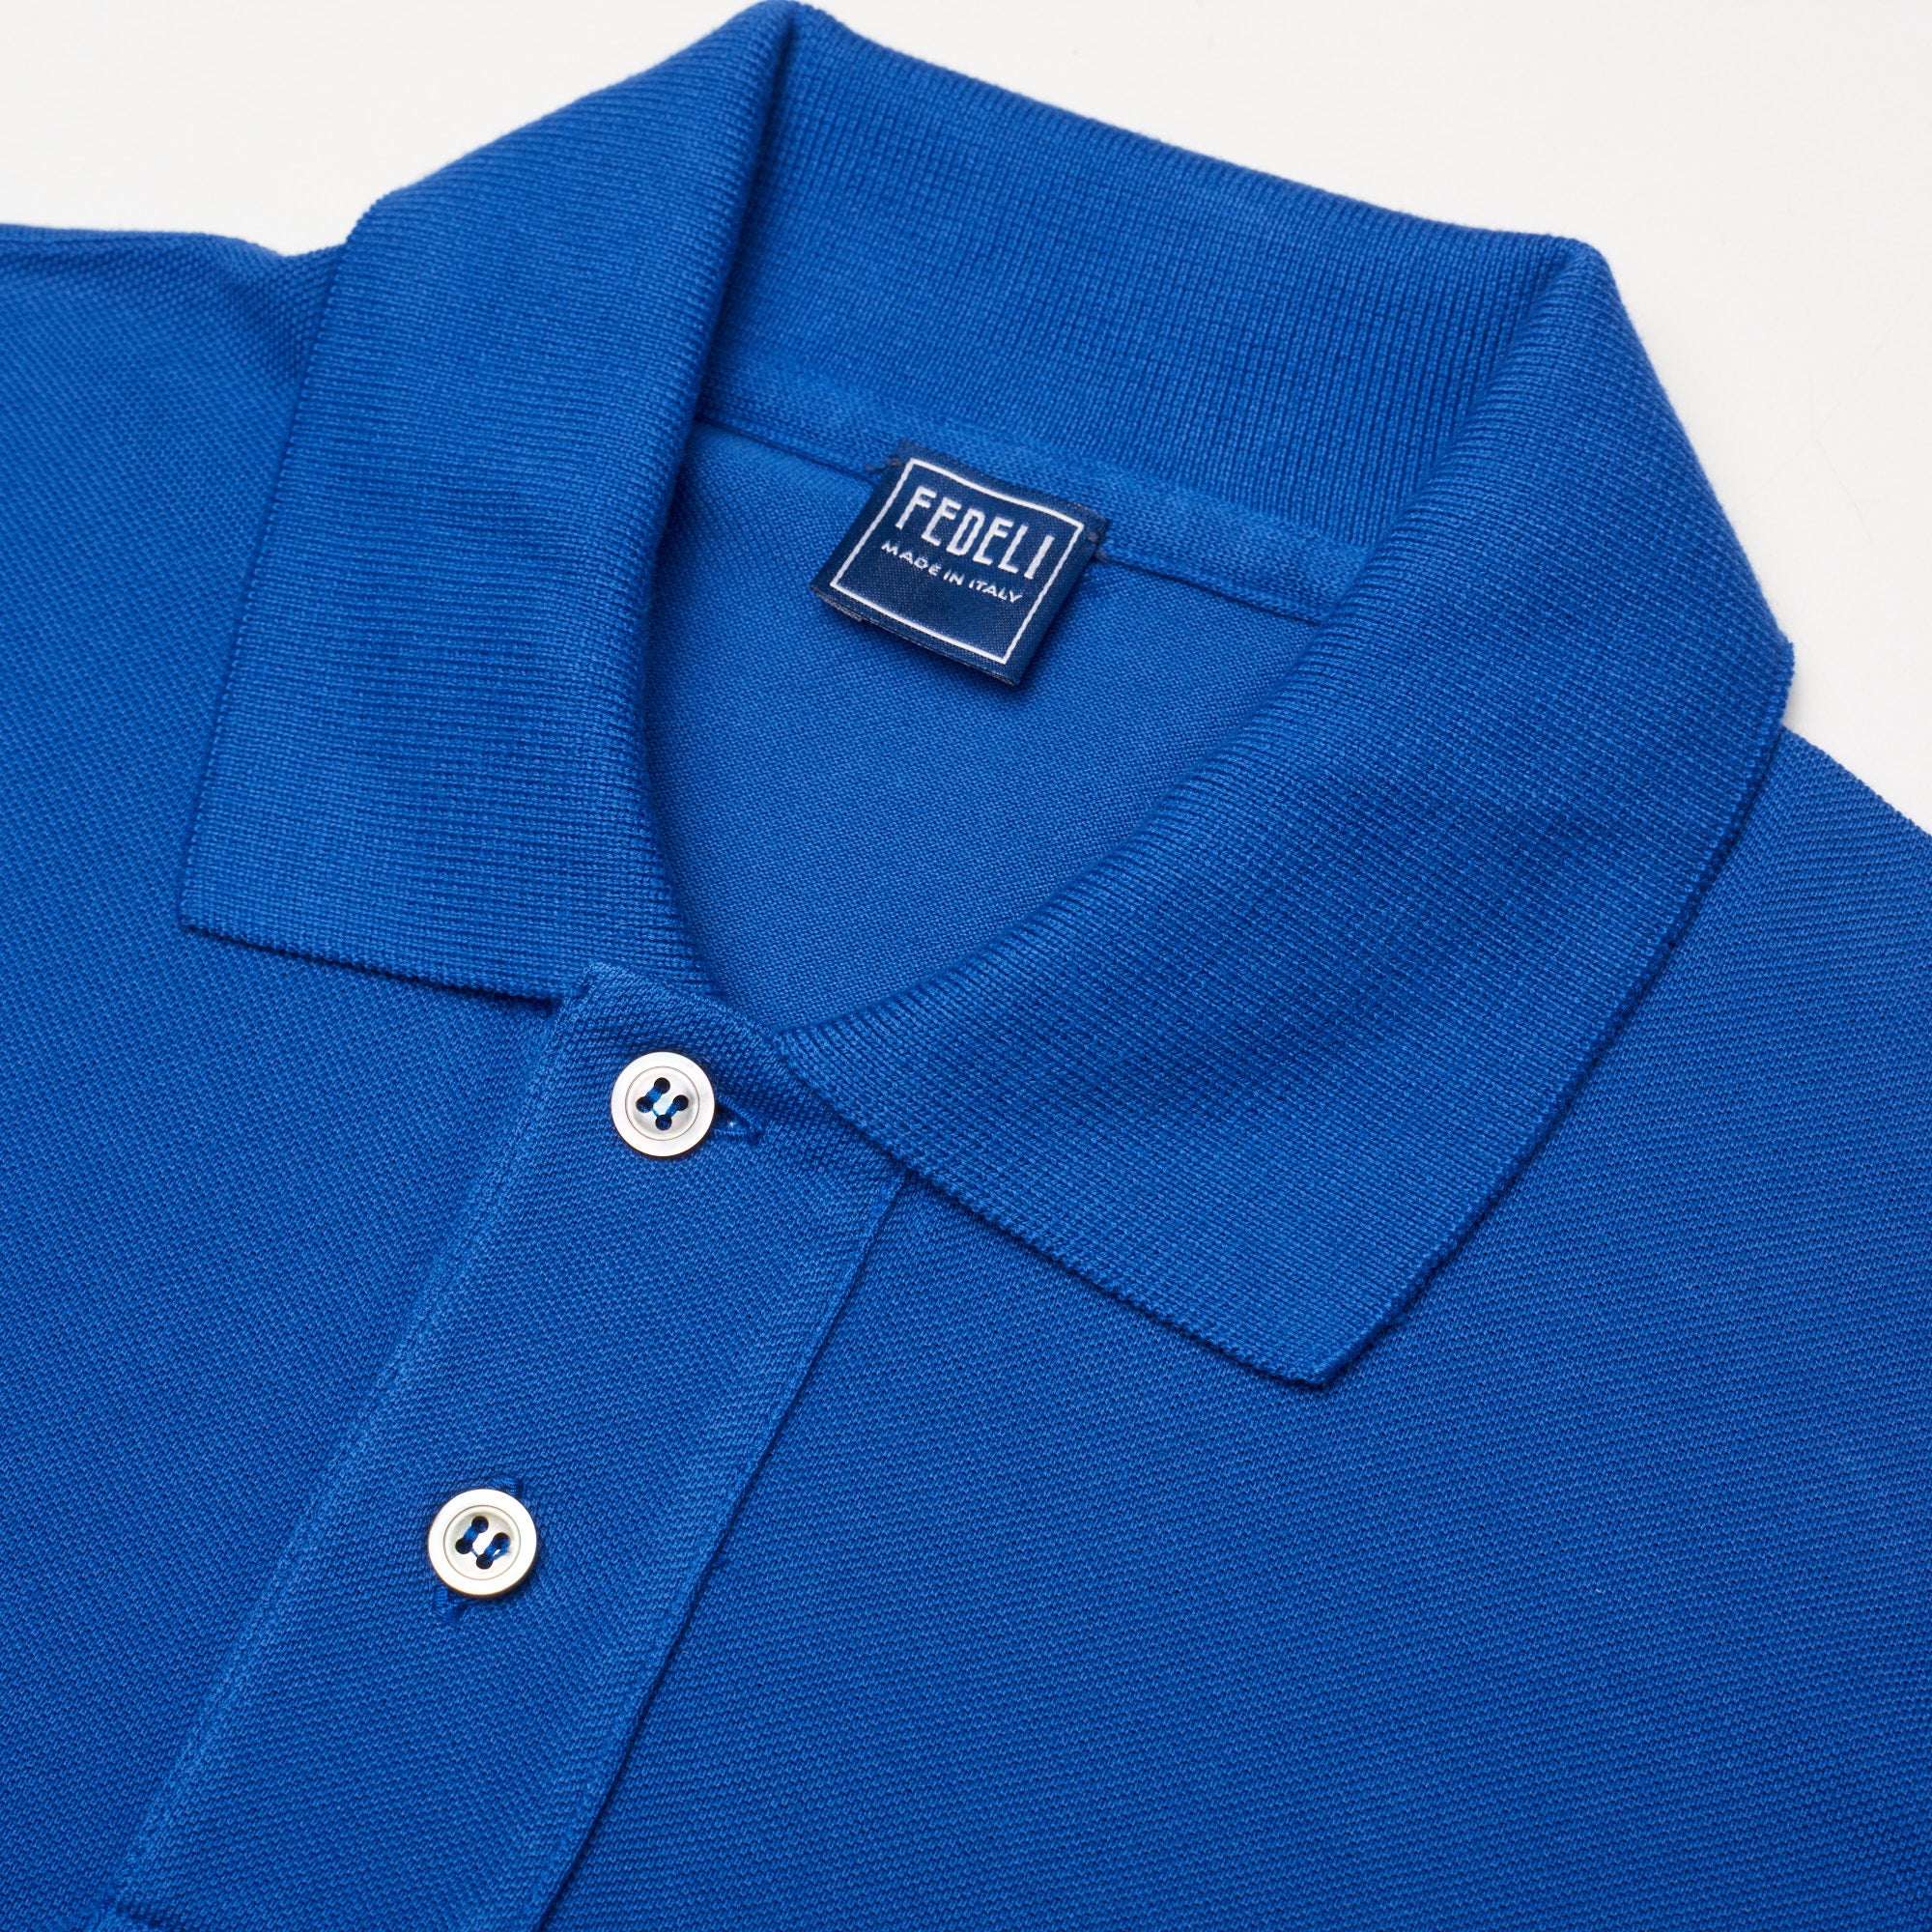 FEDELI "West" Blue Cotton Pique Short Sleeve Polo Shirt EU 48 NEW US S FEDELI